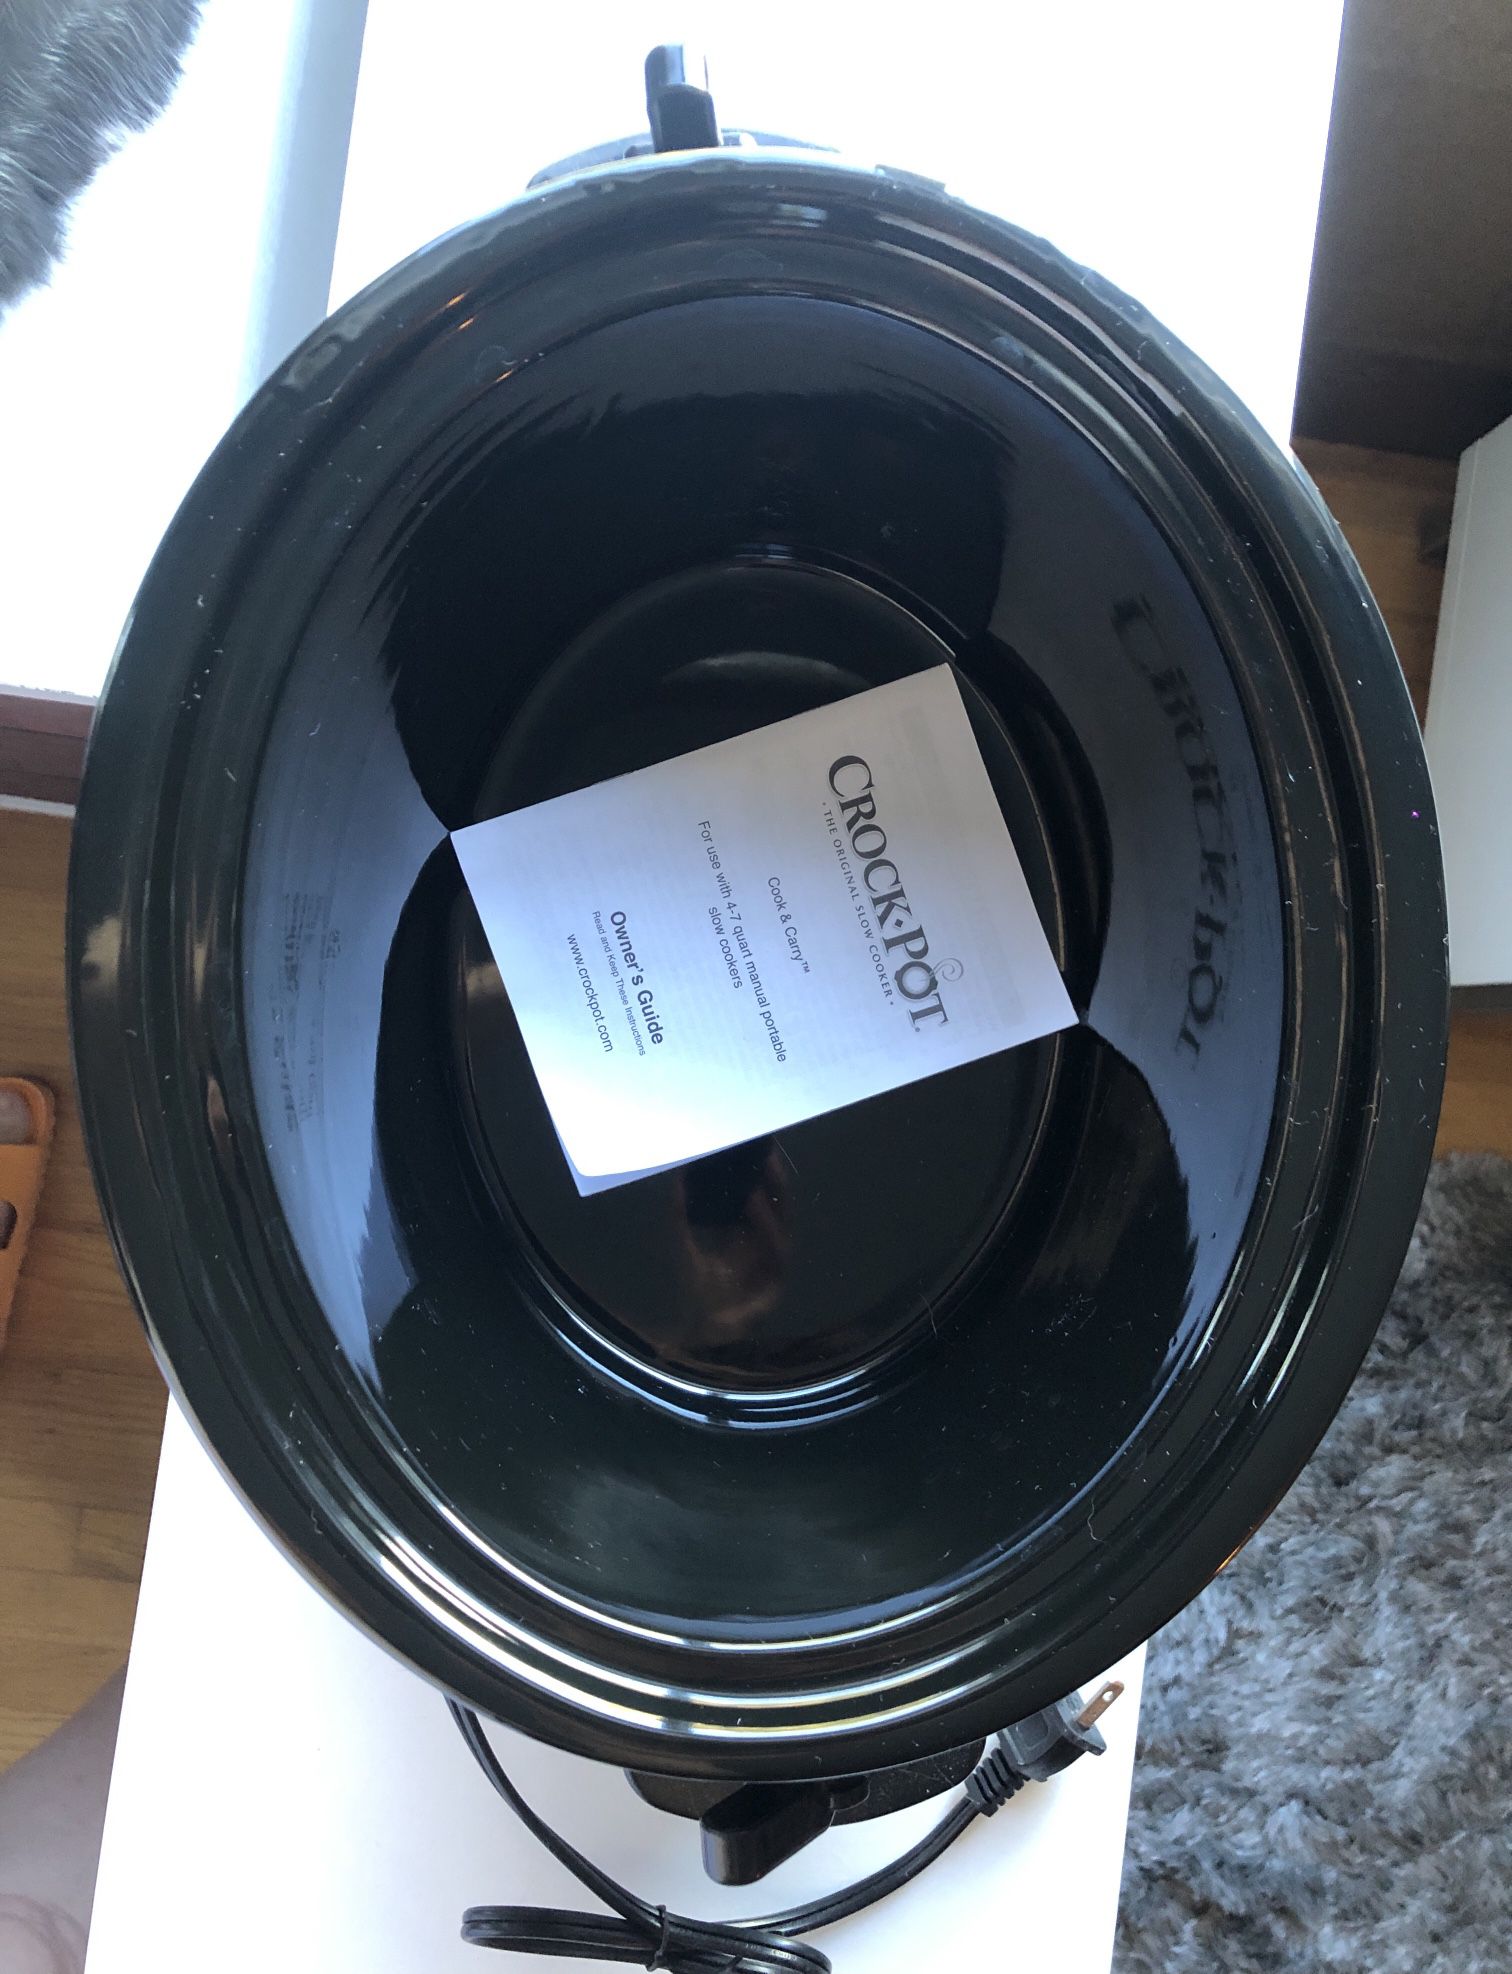 Ninja Foodi 5 Quart Pressure Cooker Crock Pot for Sale in Los Angeles, CA -  OfferUp